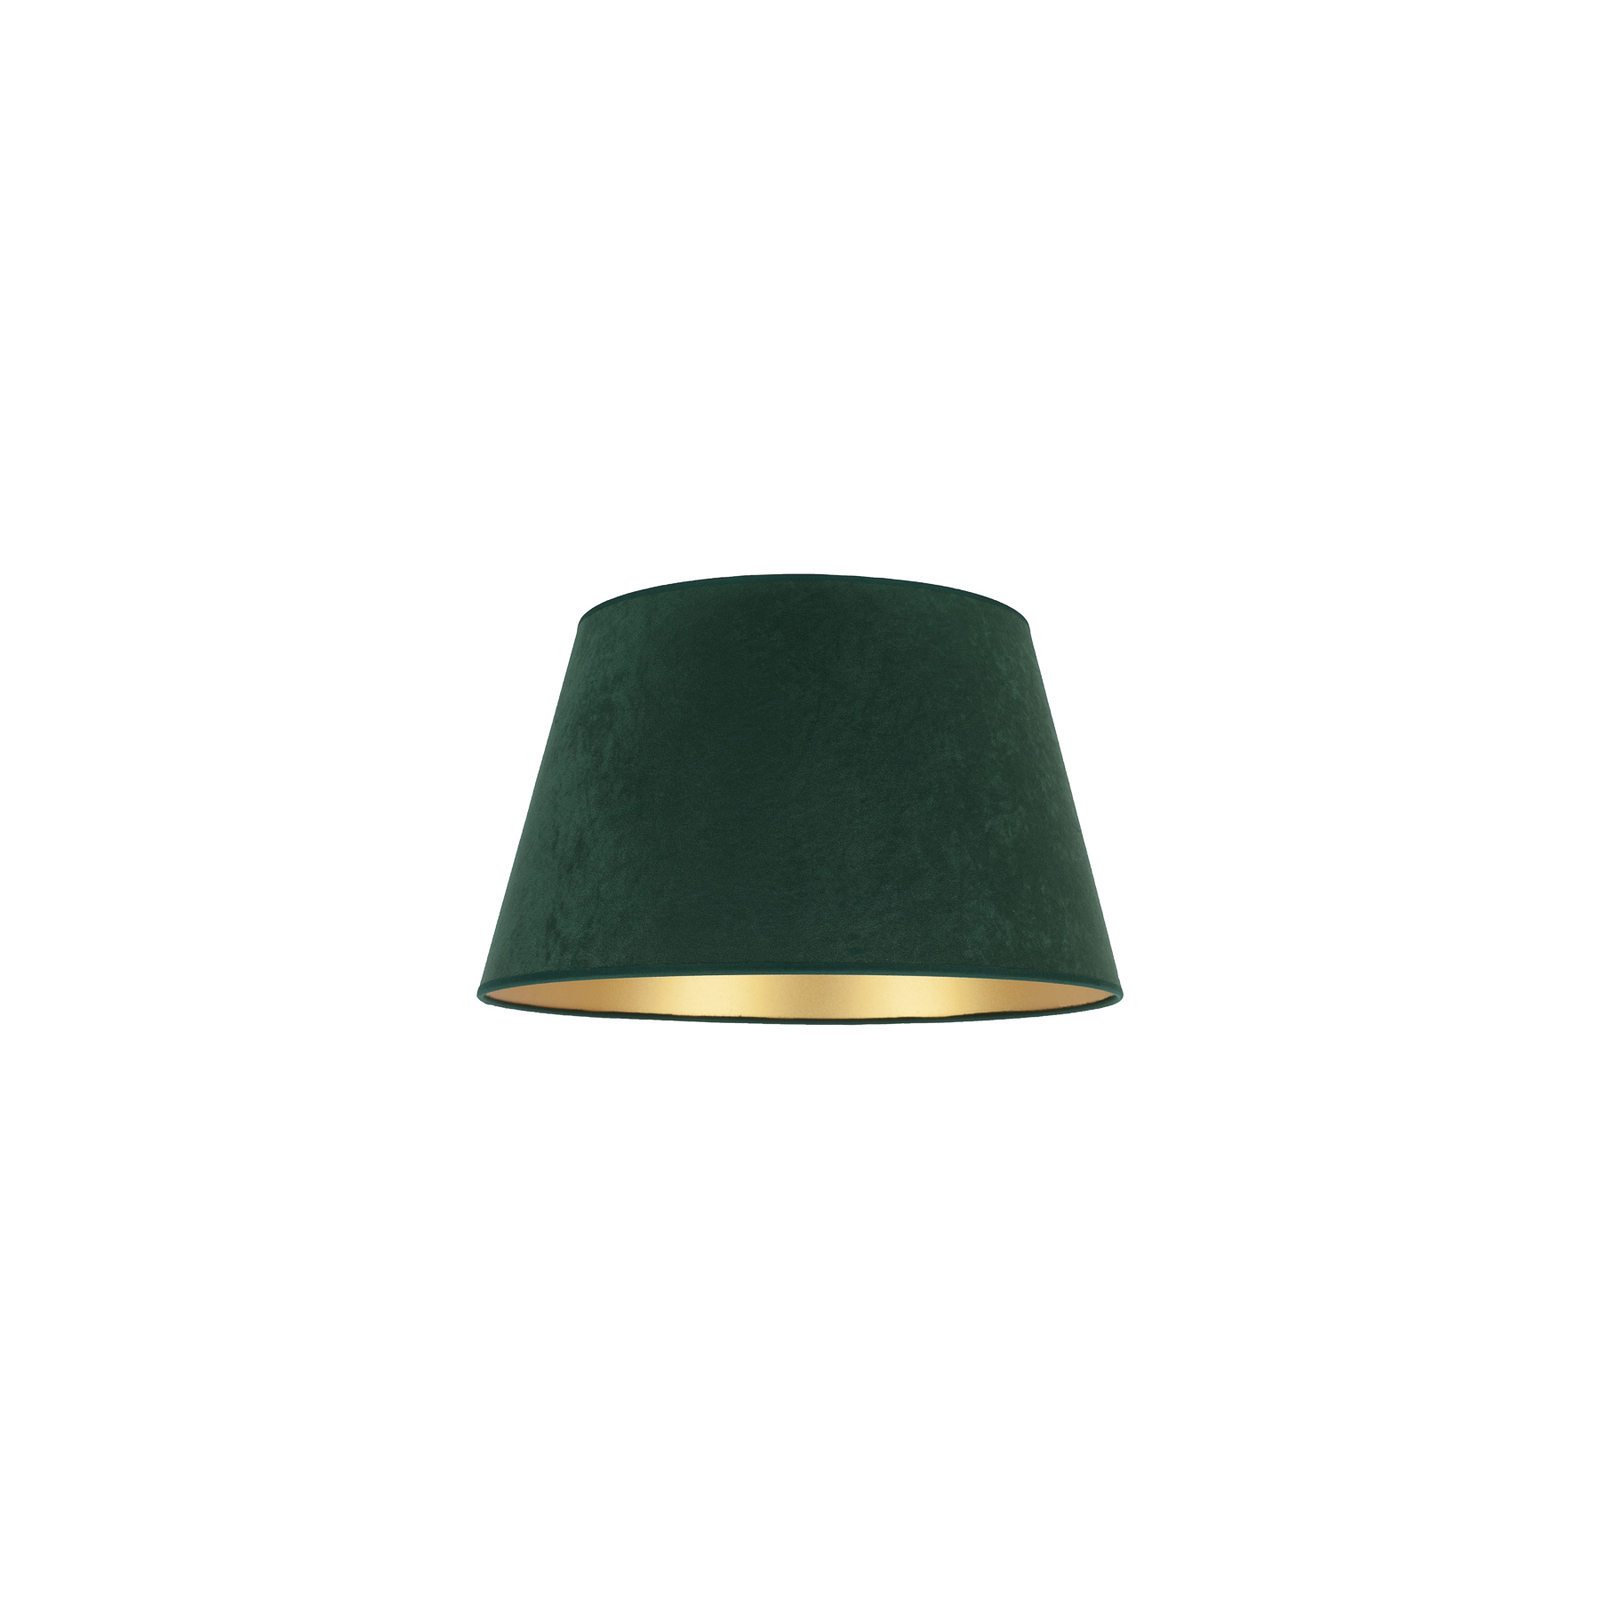 Cone lampshade height 18 cm, dark green/gold